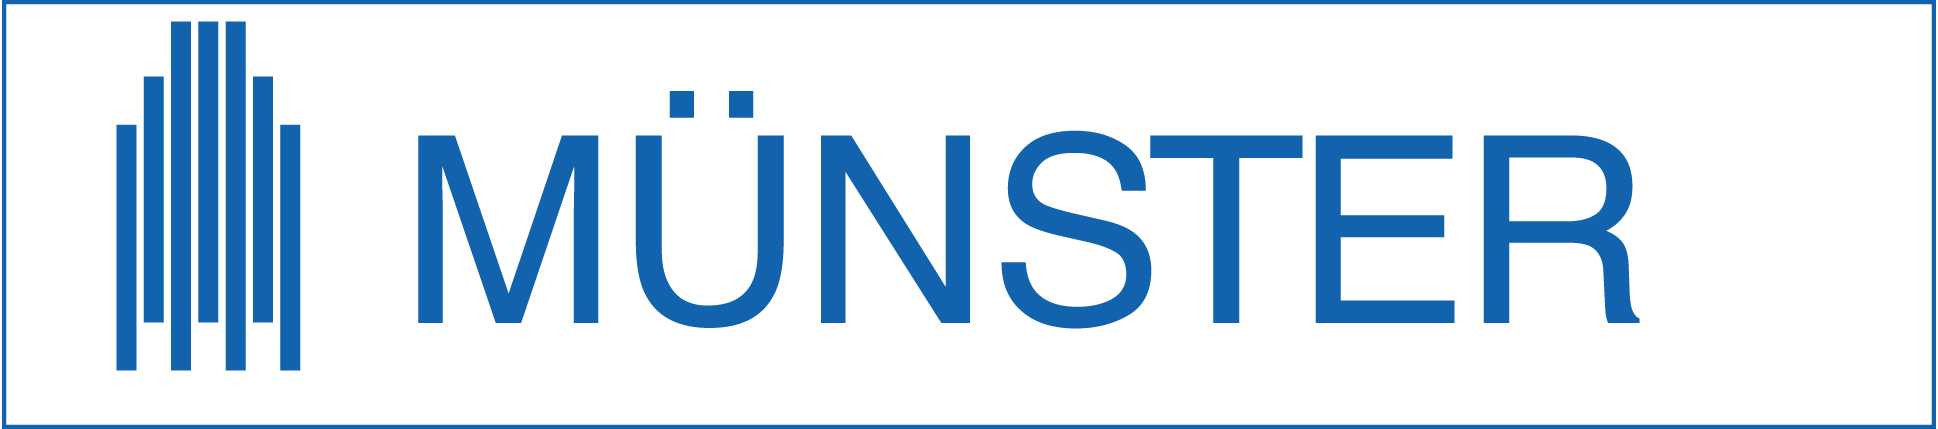 https://www.stadt-muenster.de/fileadmin//user_upload/stadt-muenster/13_medien/pics/logo-blau-rahmen.jpg